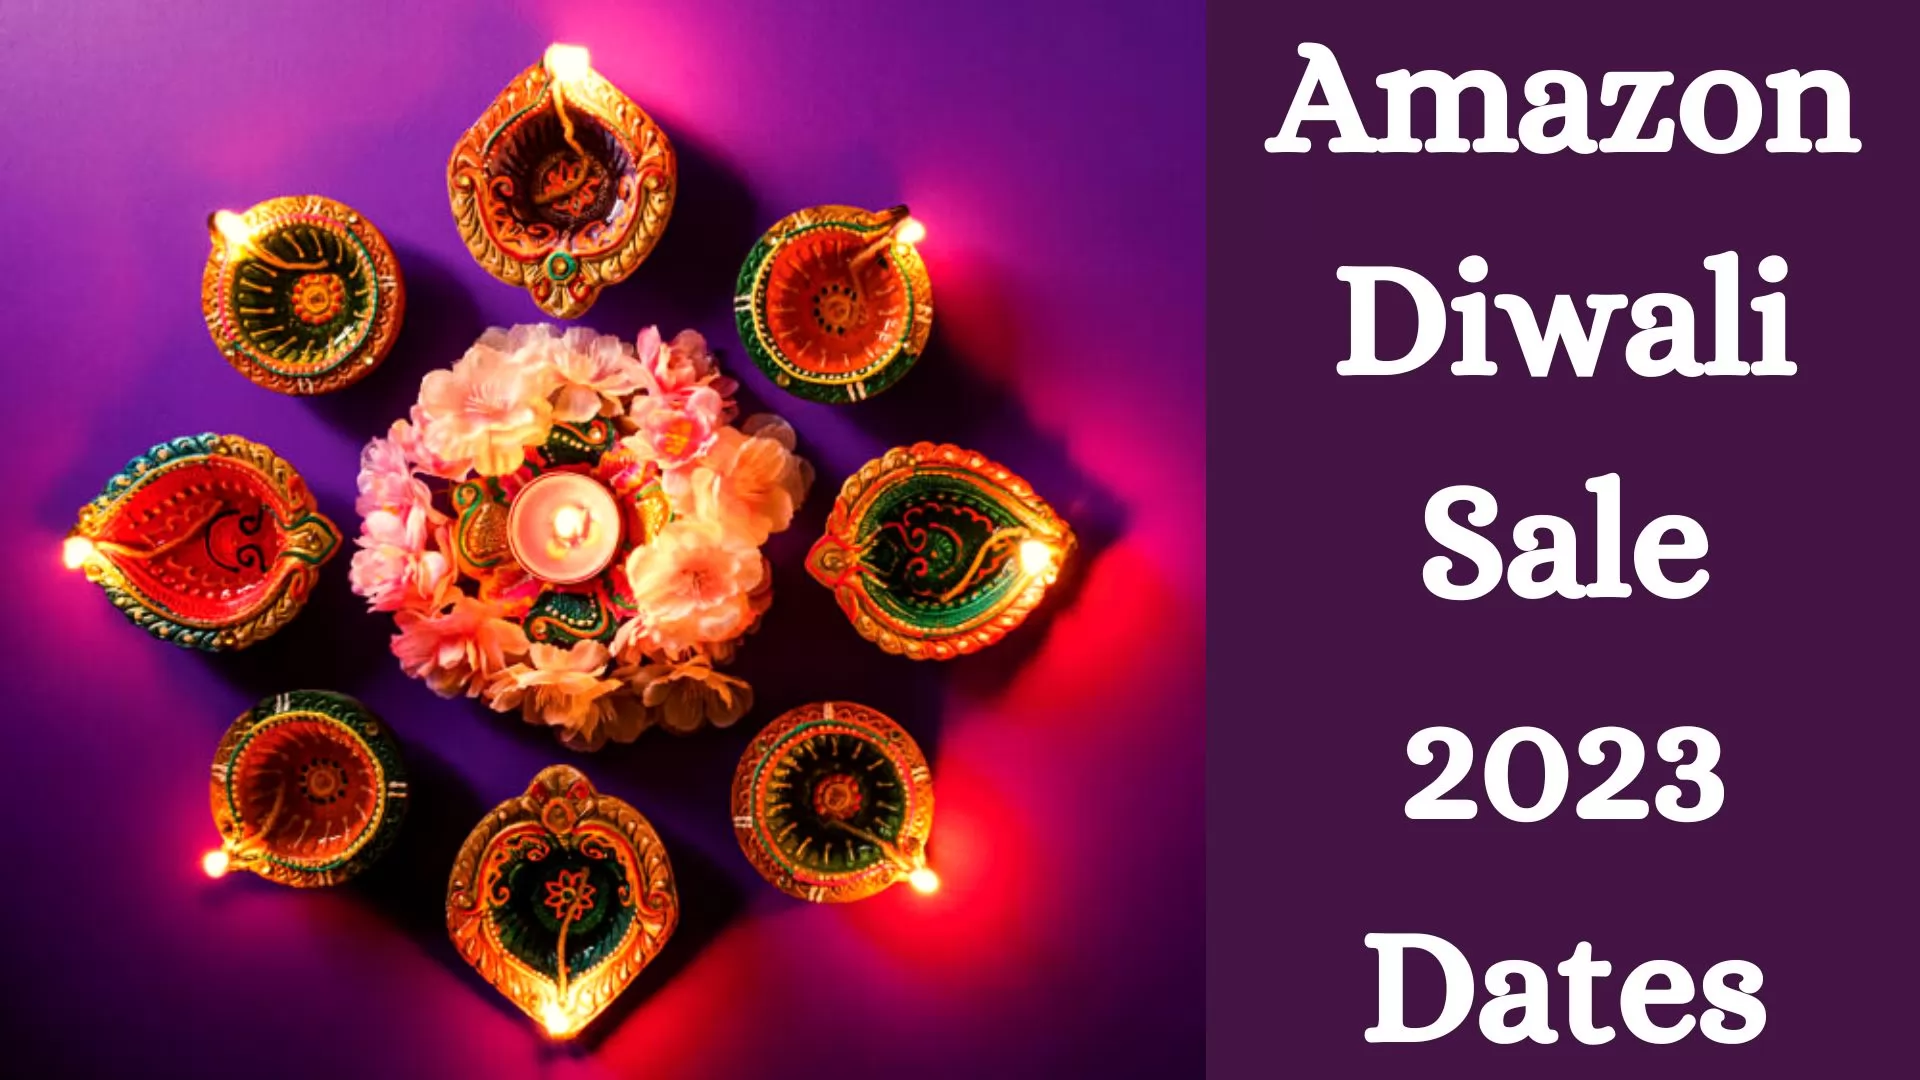 Amazon Diwali Sale 2023 Date